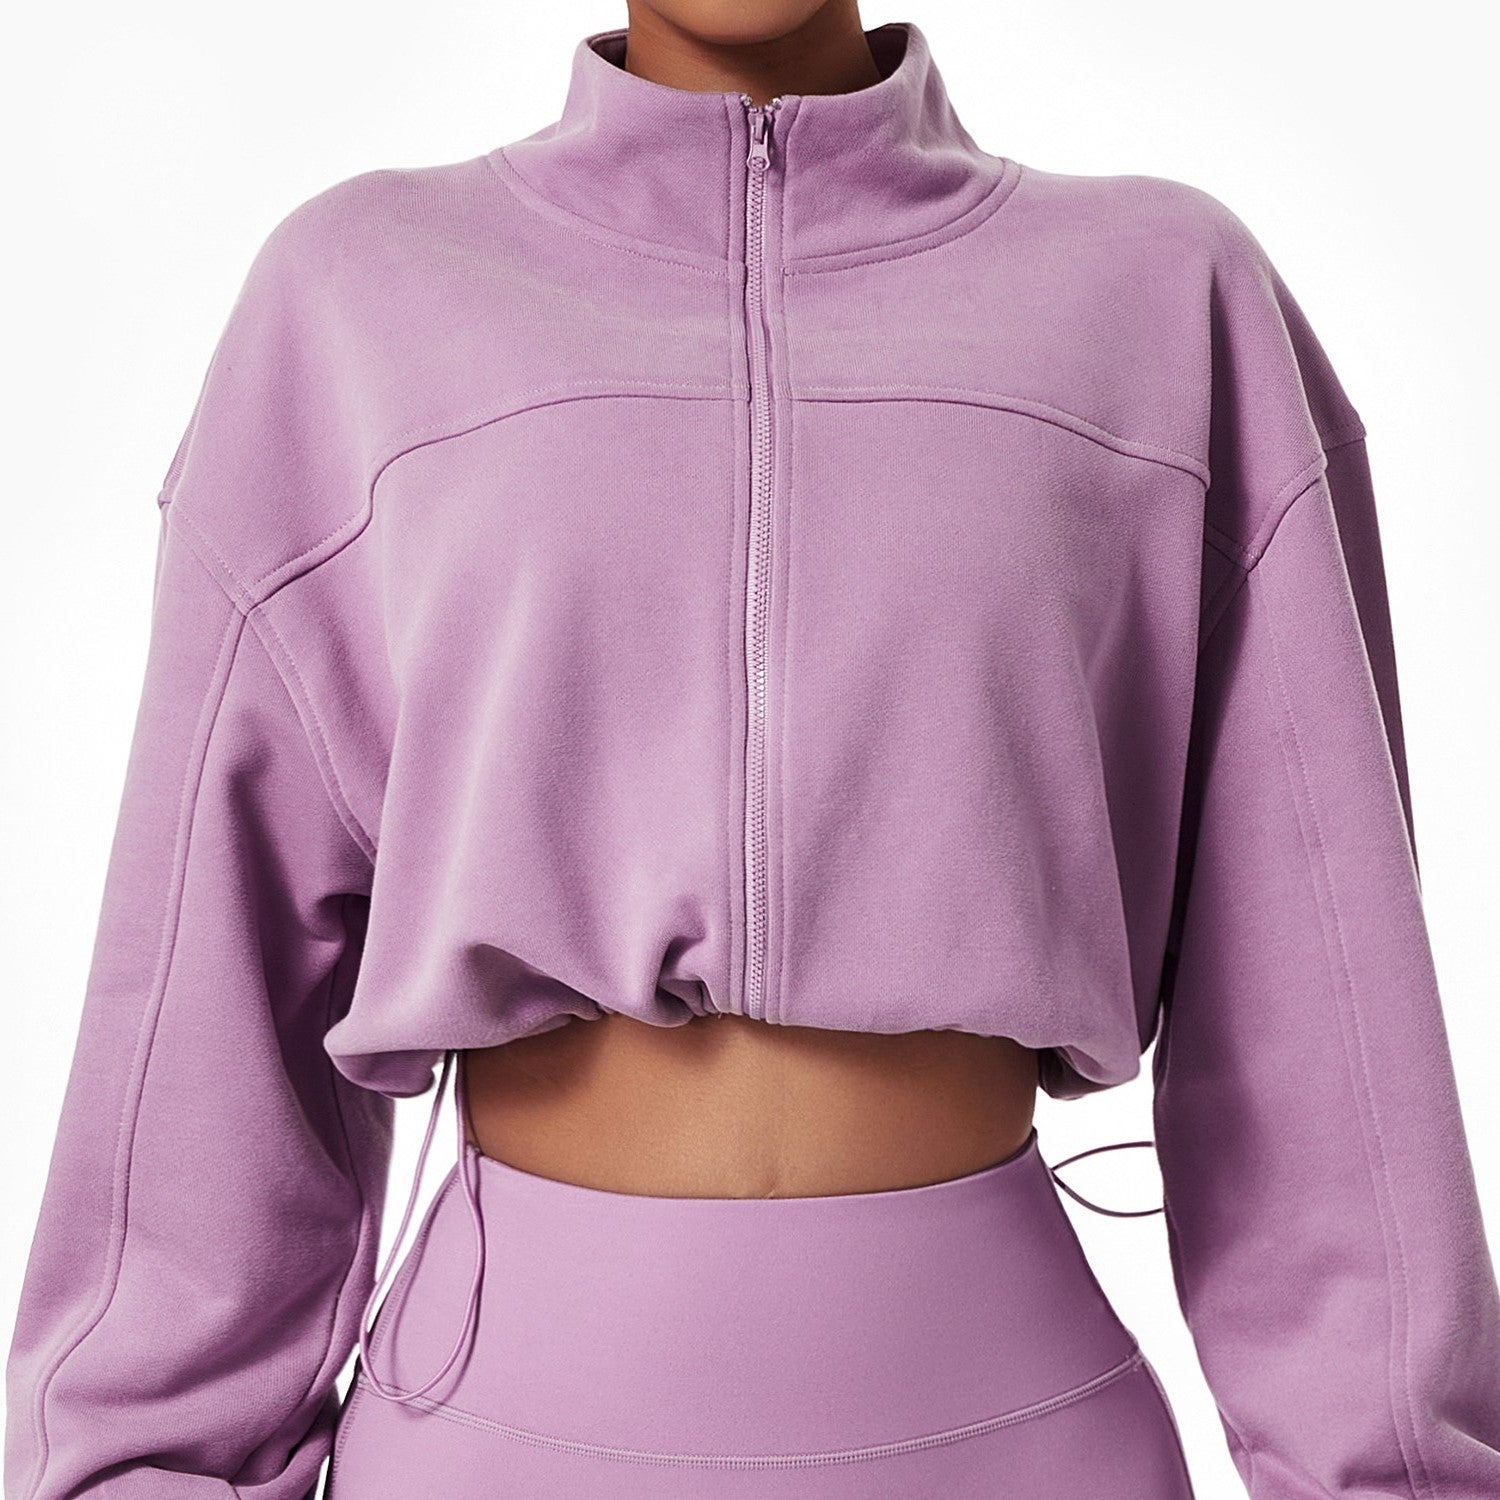 Loose Long Sleeve Casual Sports Sweater Versatile Top Outdoor Running Riding Training Zipper Coat Women's Sweater